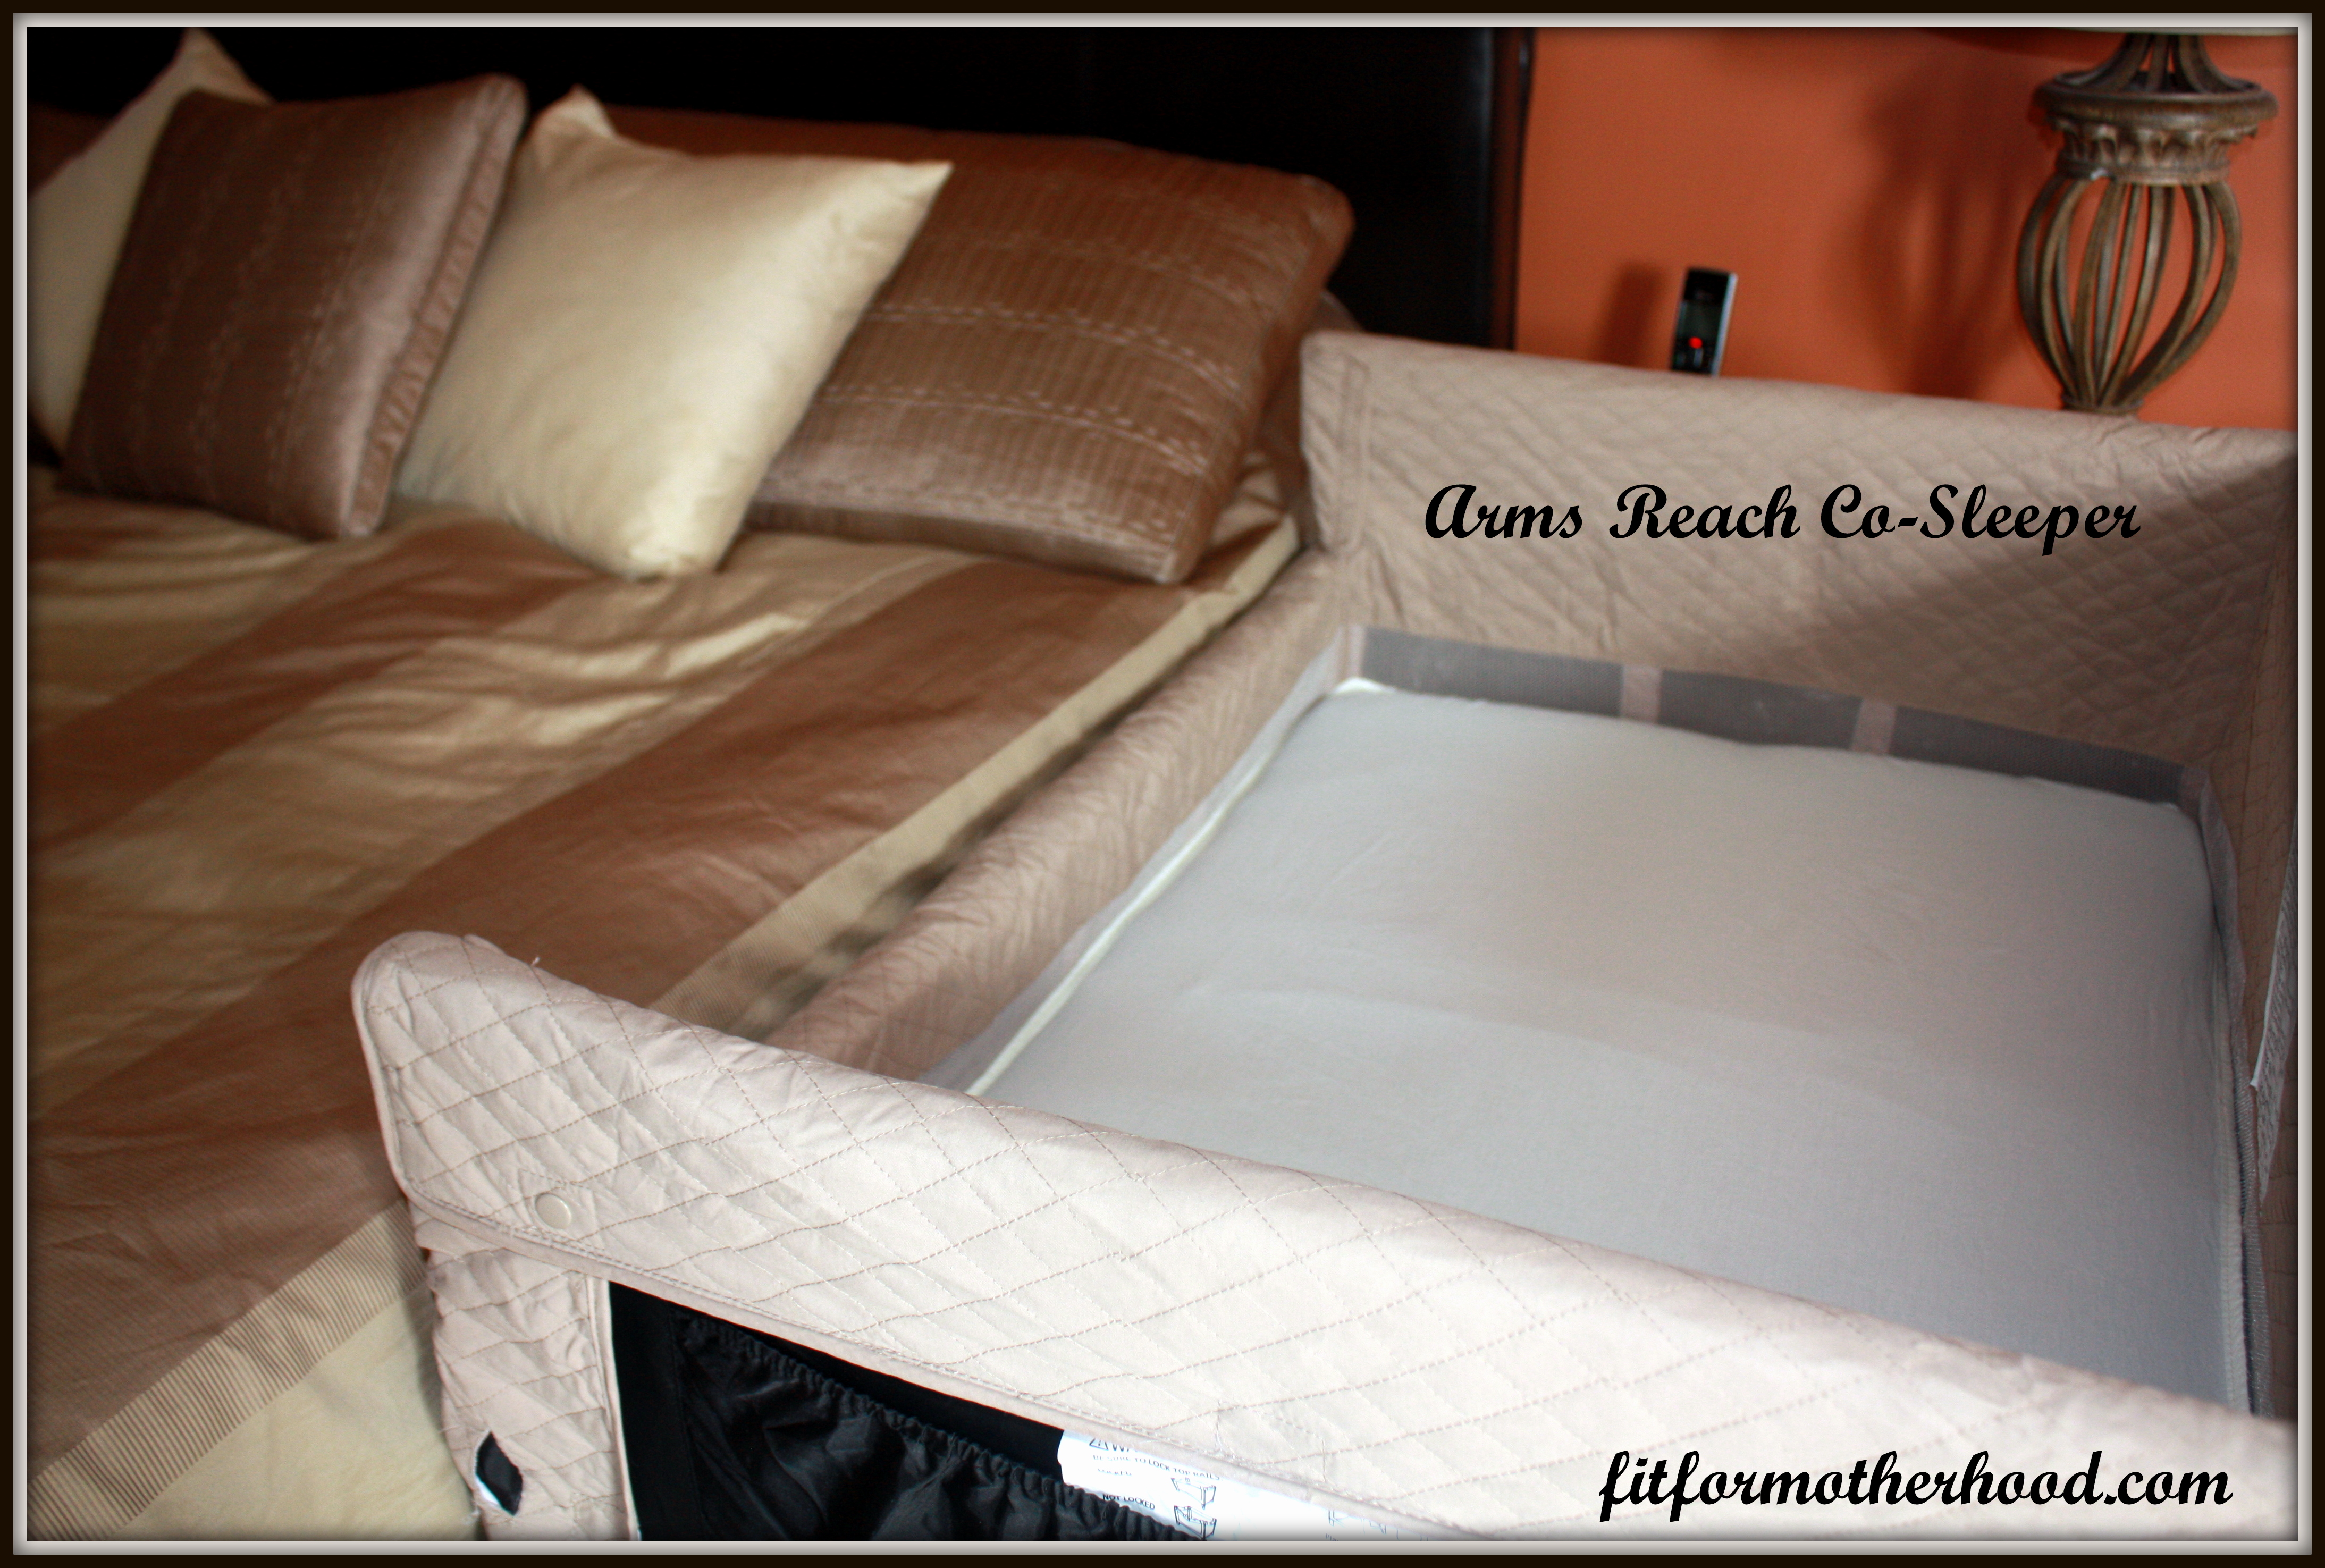 mattress that fits arms reach ideal co sleeper